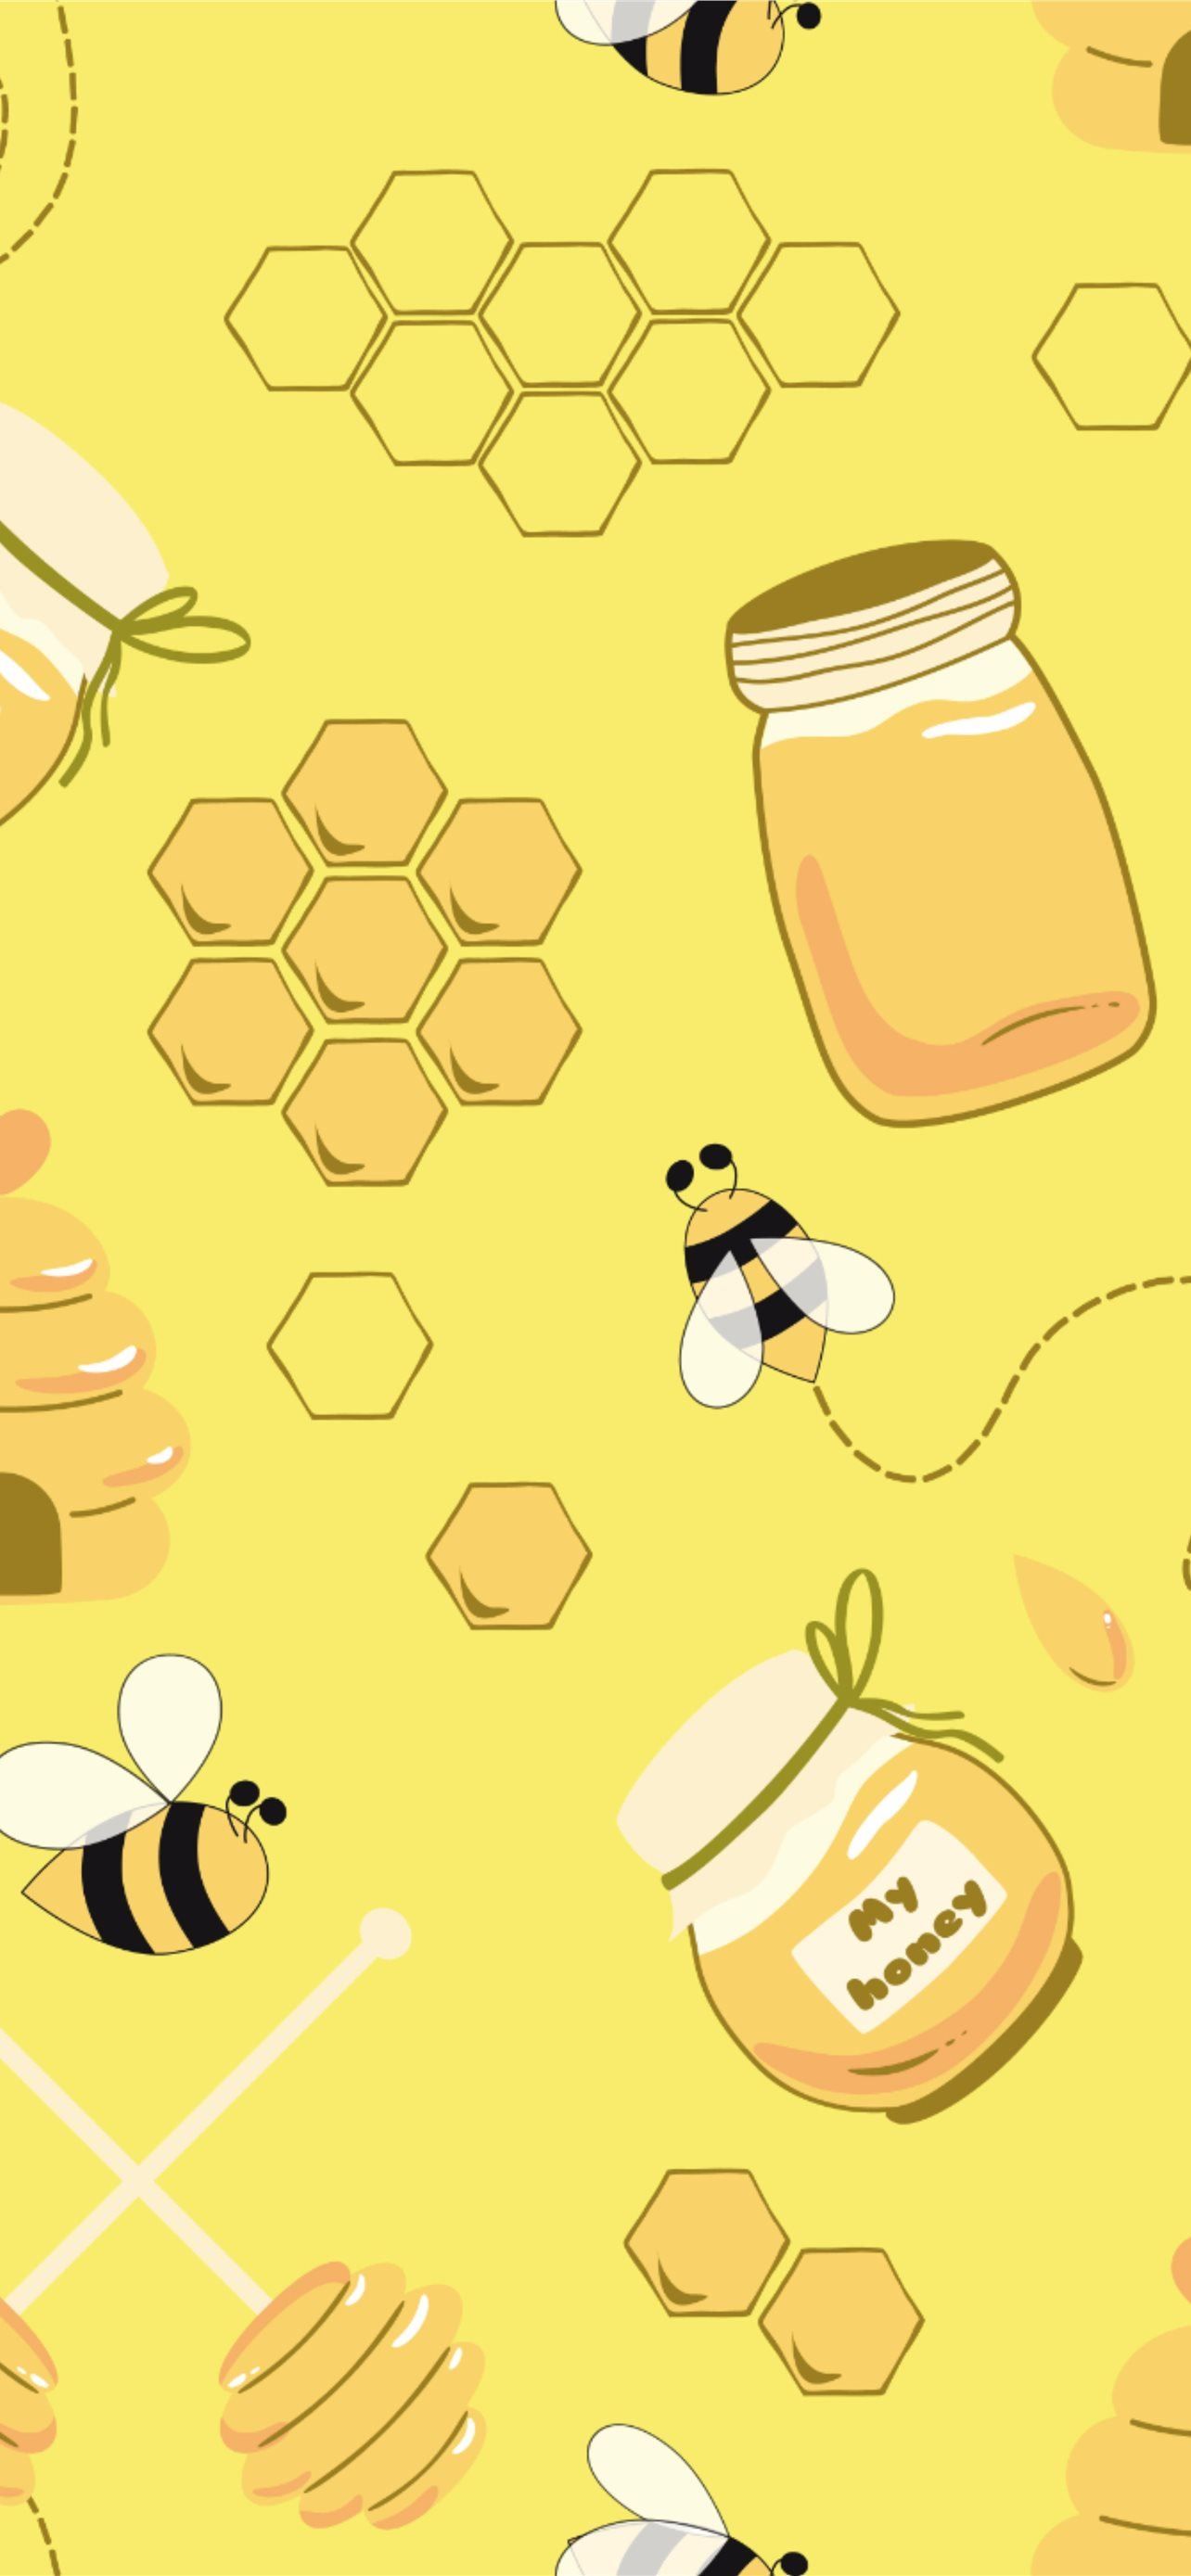 Cute Bee Images  Free Download on Freepik